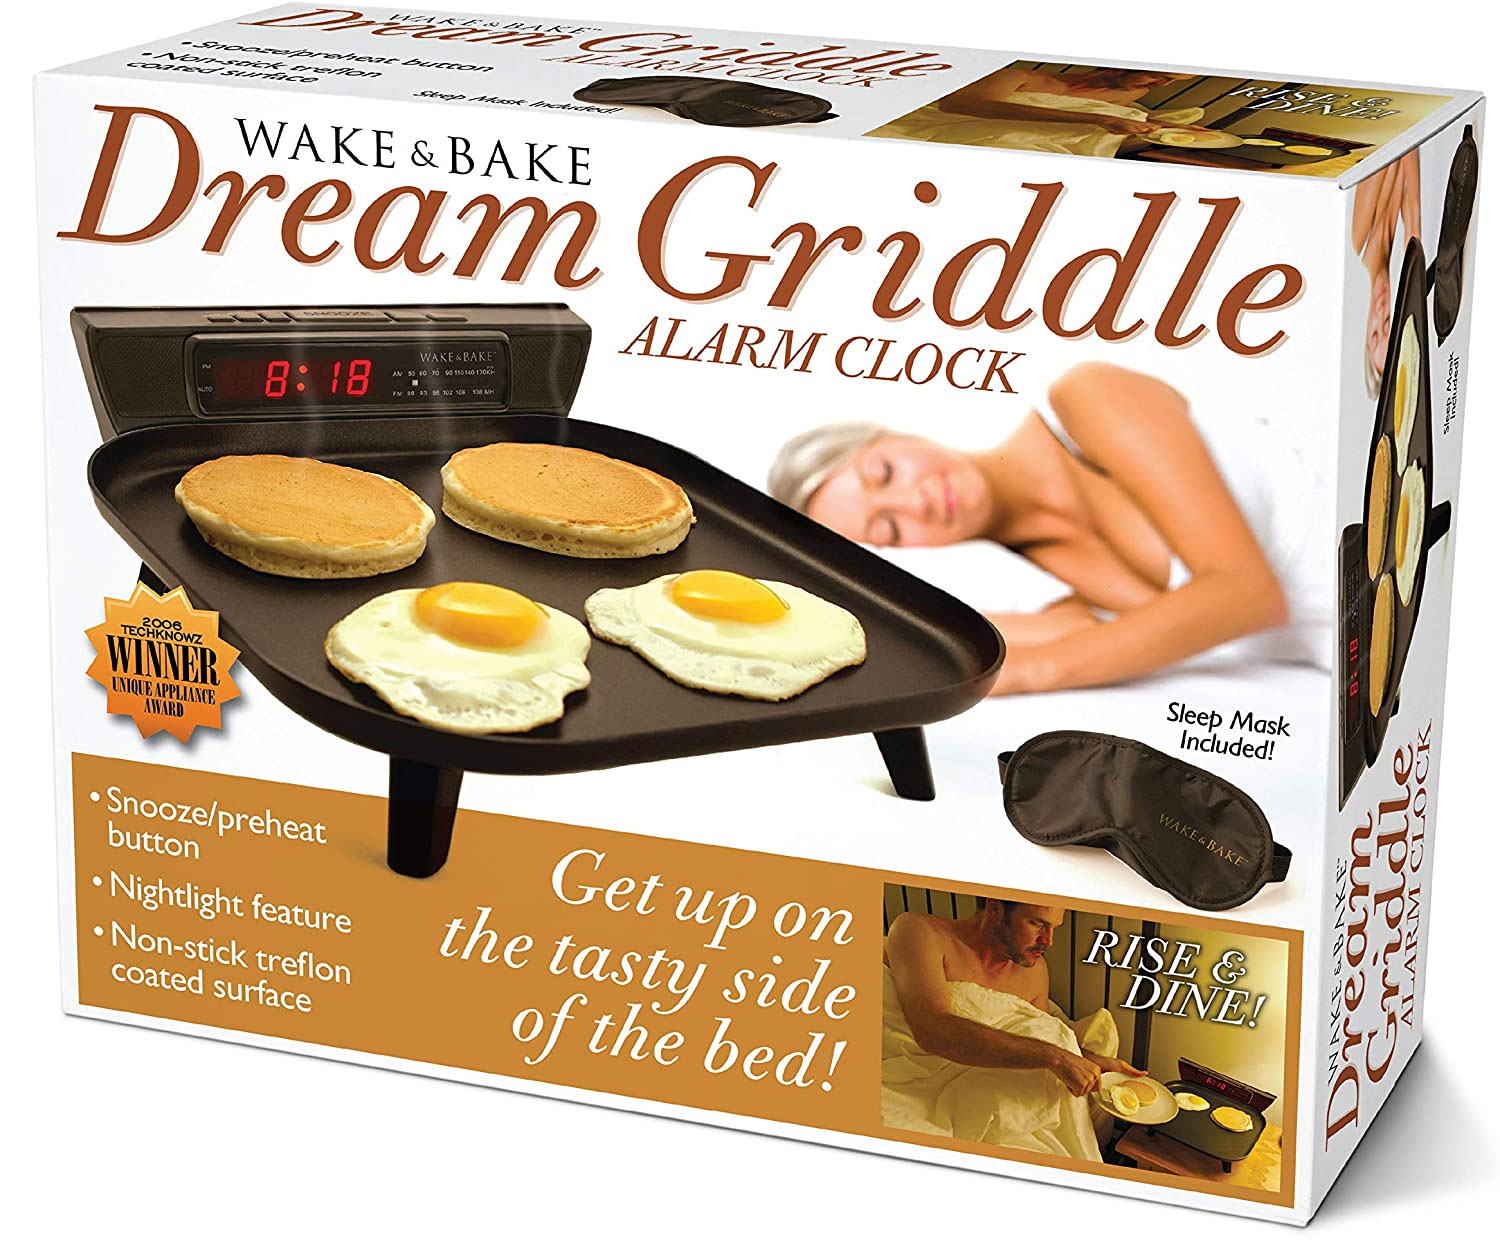 Wake & Bake Dream Griddle Alarm Clock